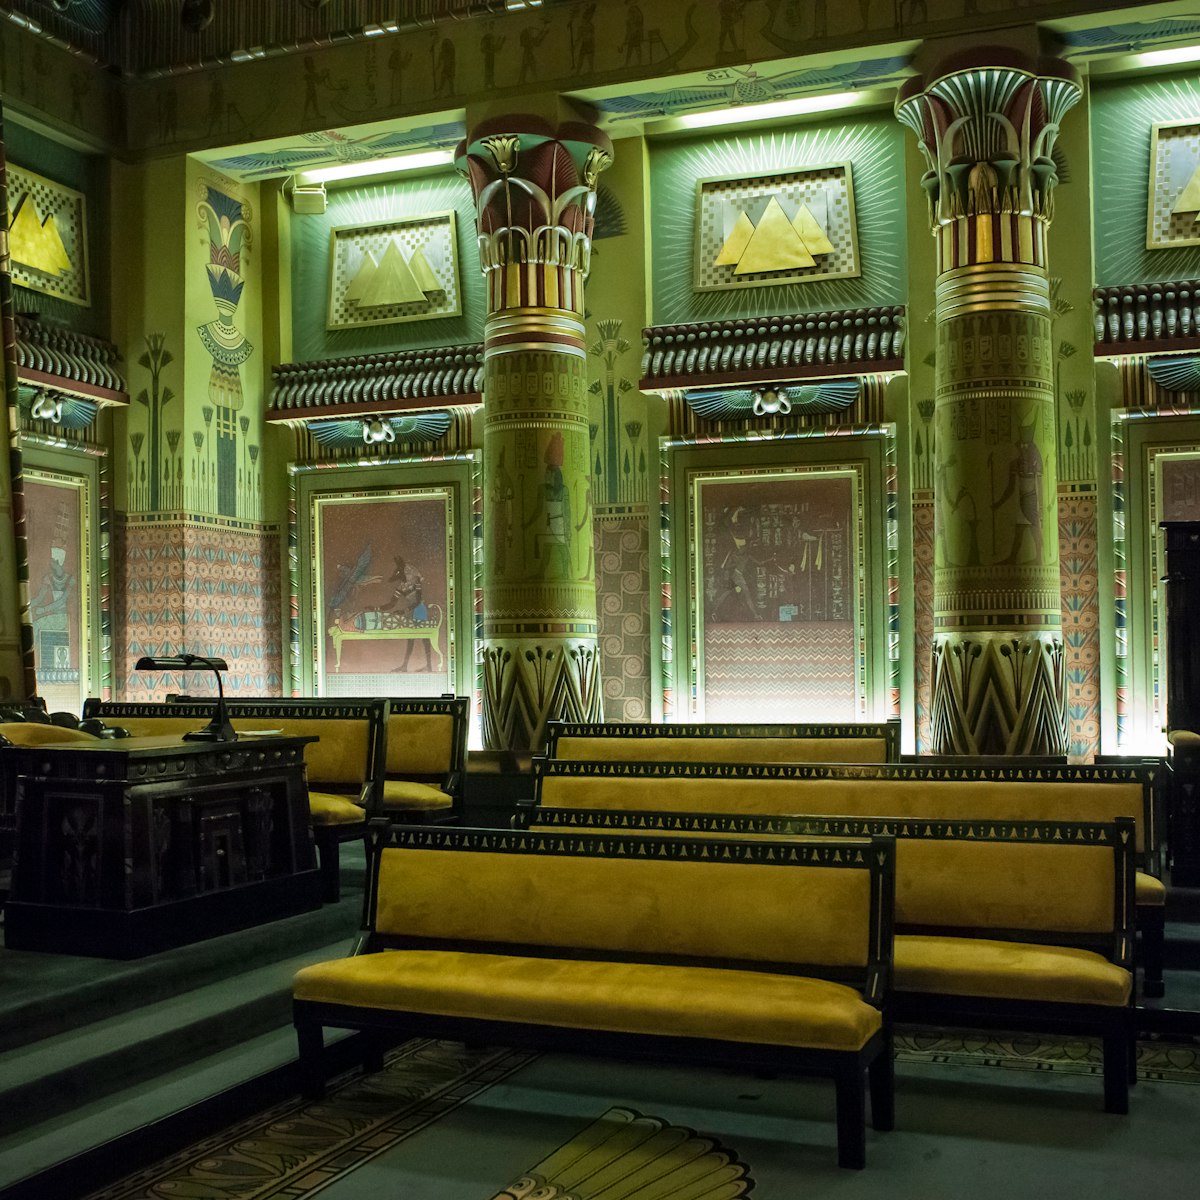 The Egyptian Hall at the Masonic Temple in Philadelphia, Pennsylvania.